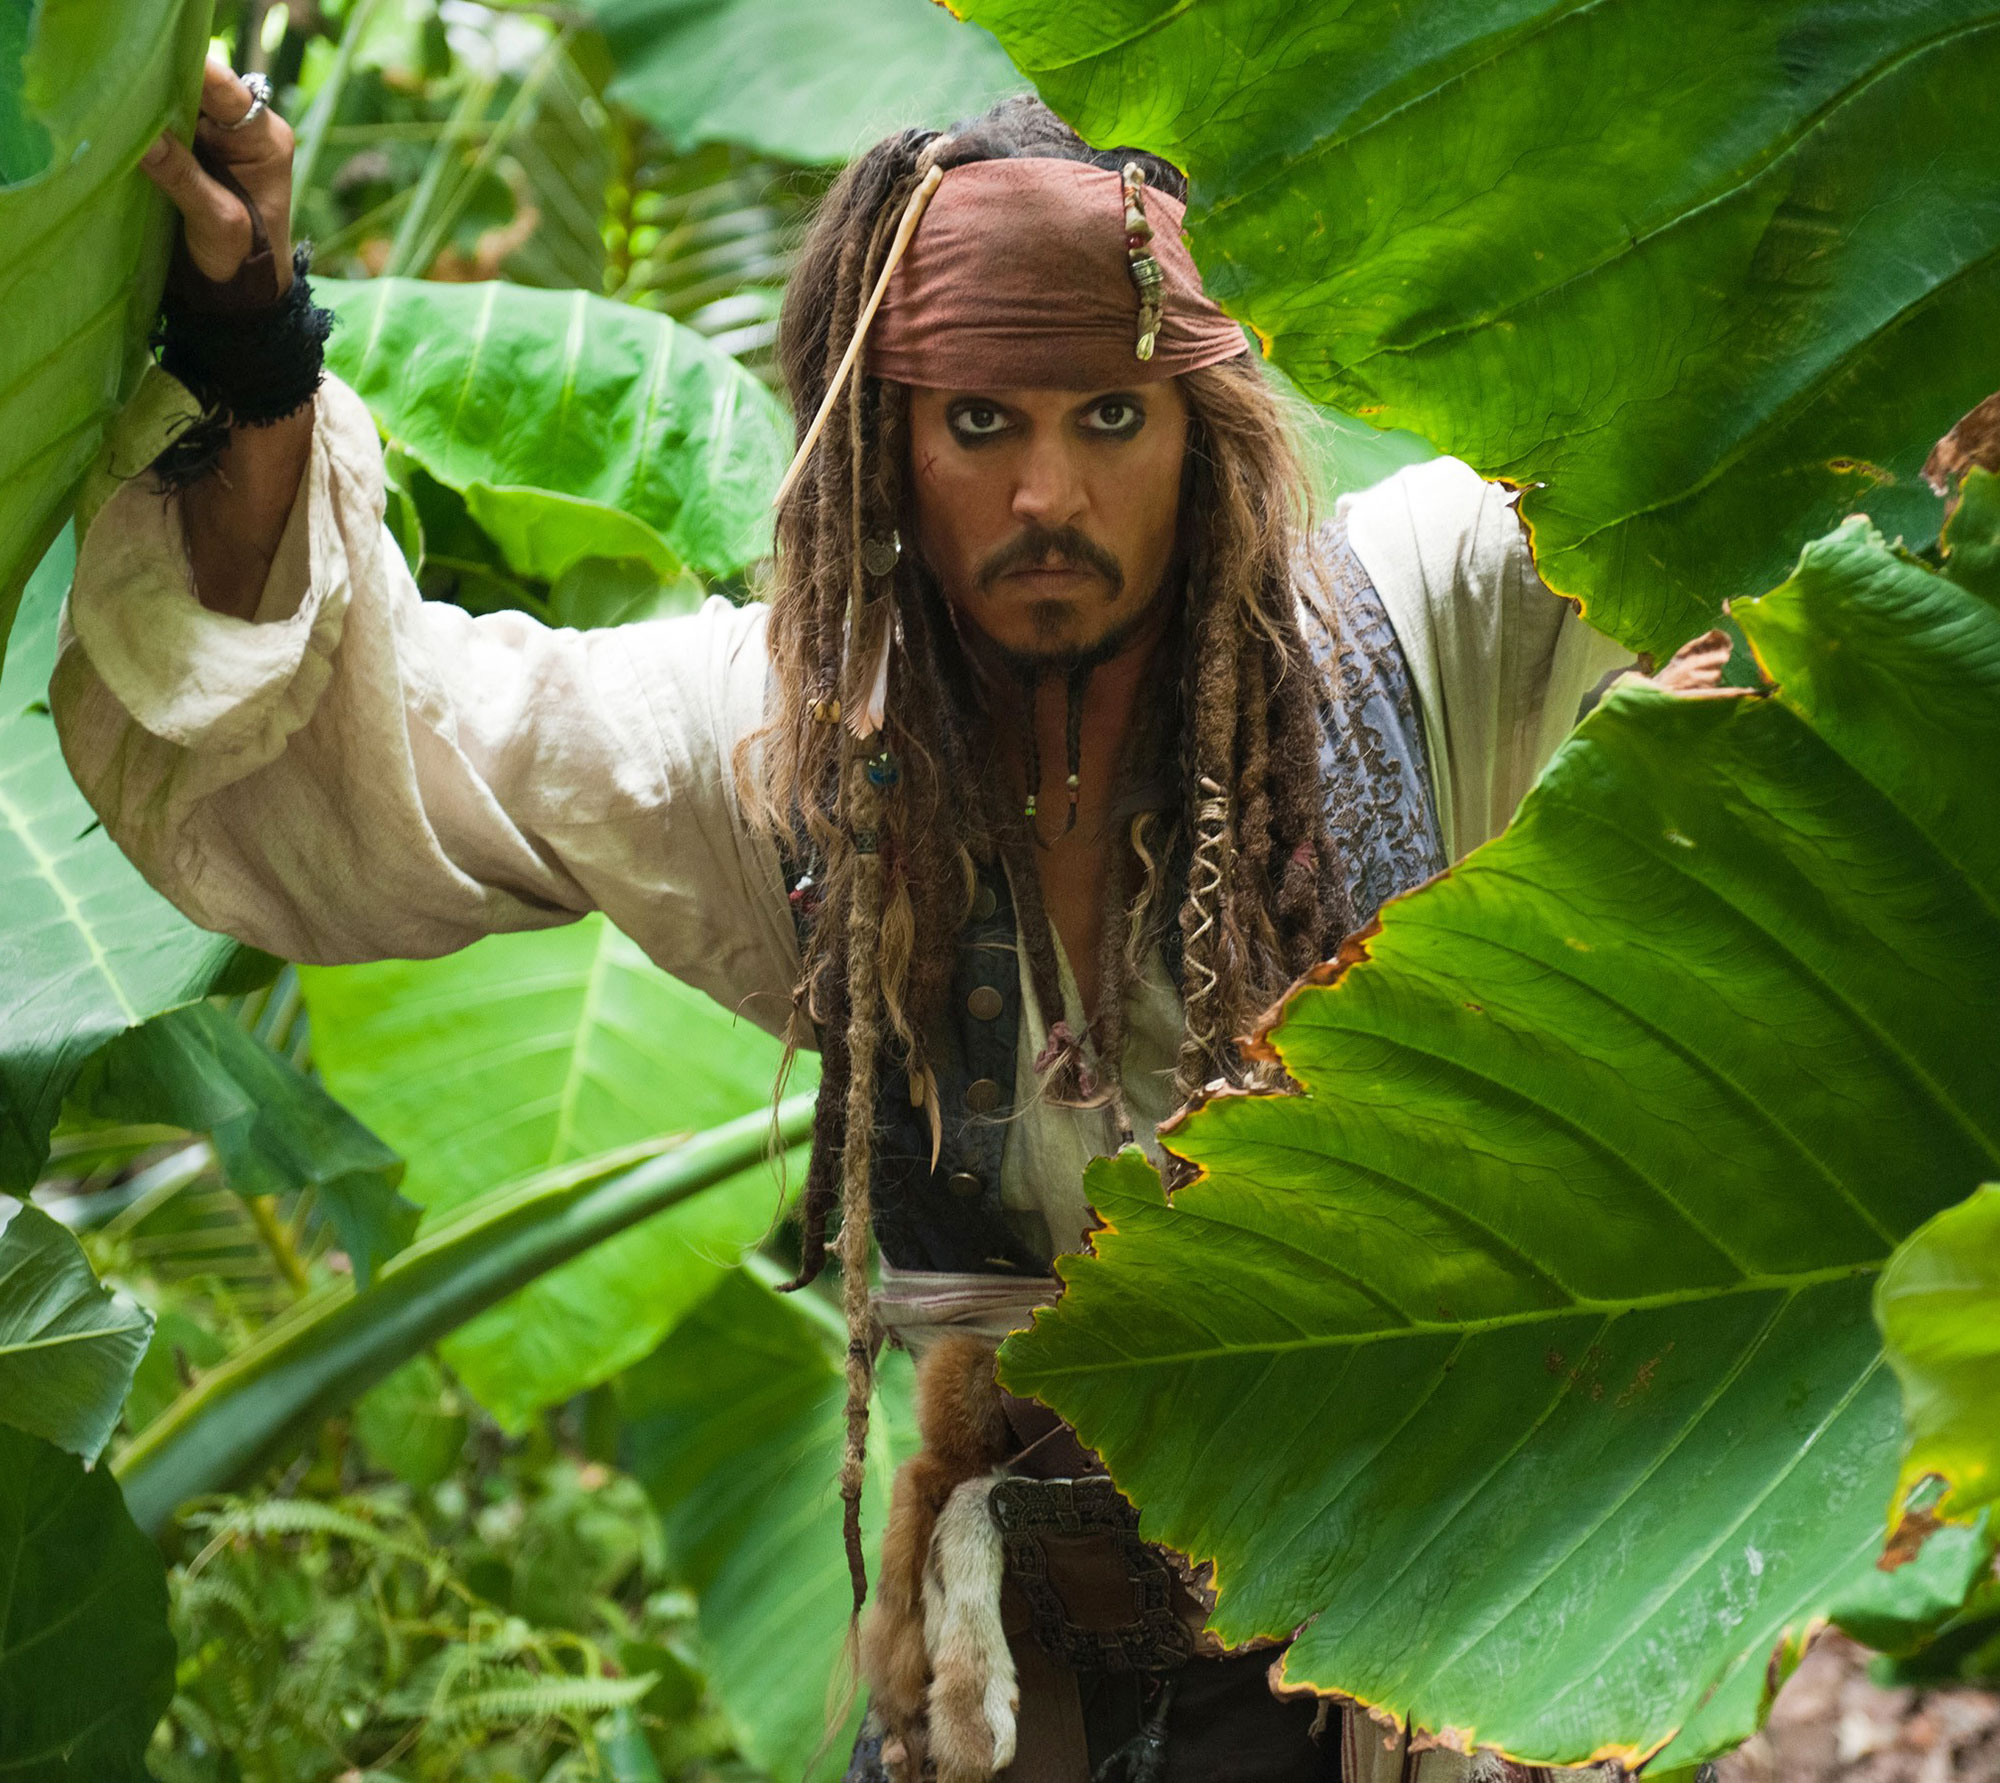 Postcode Bewijs Katholiek Pirates of the Caribbean 6': Everything to Know